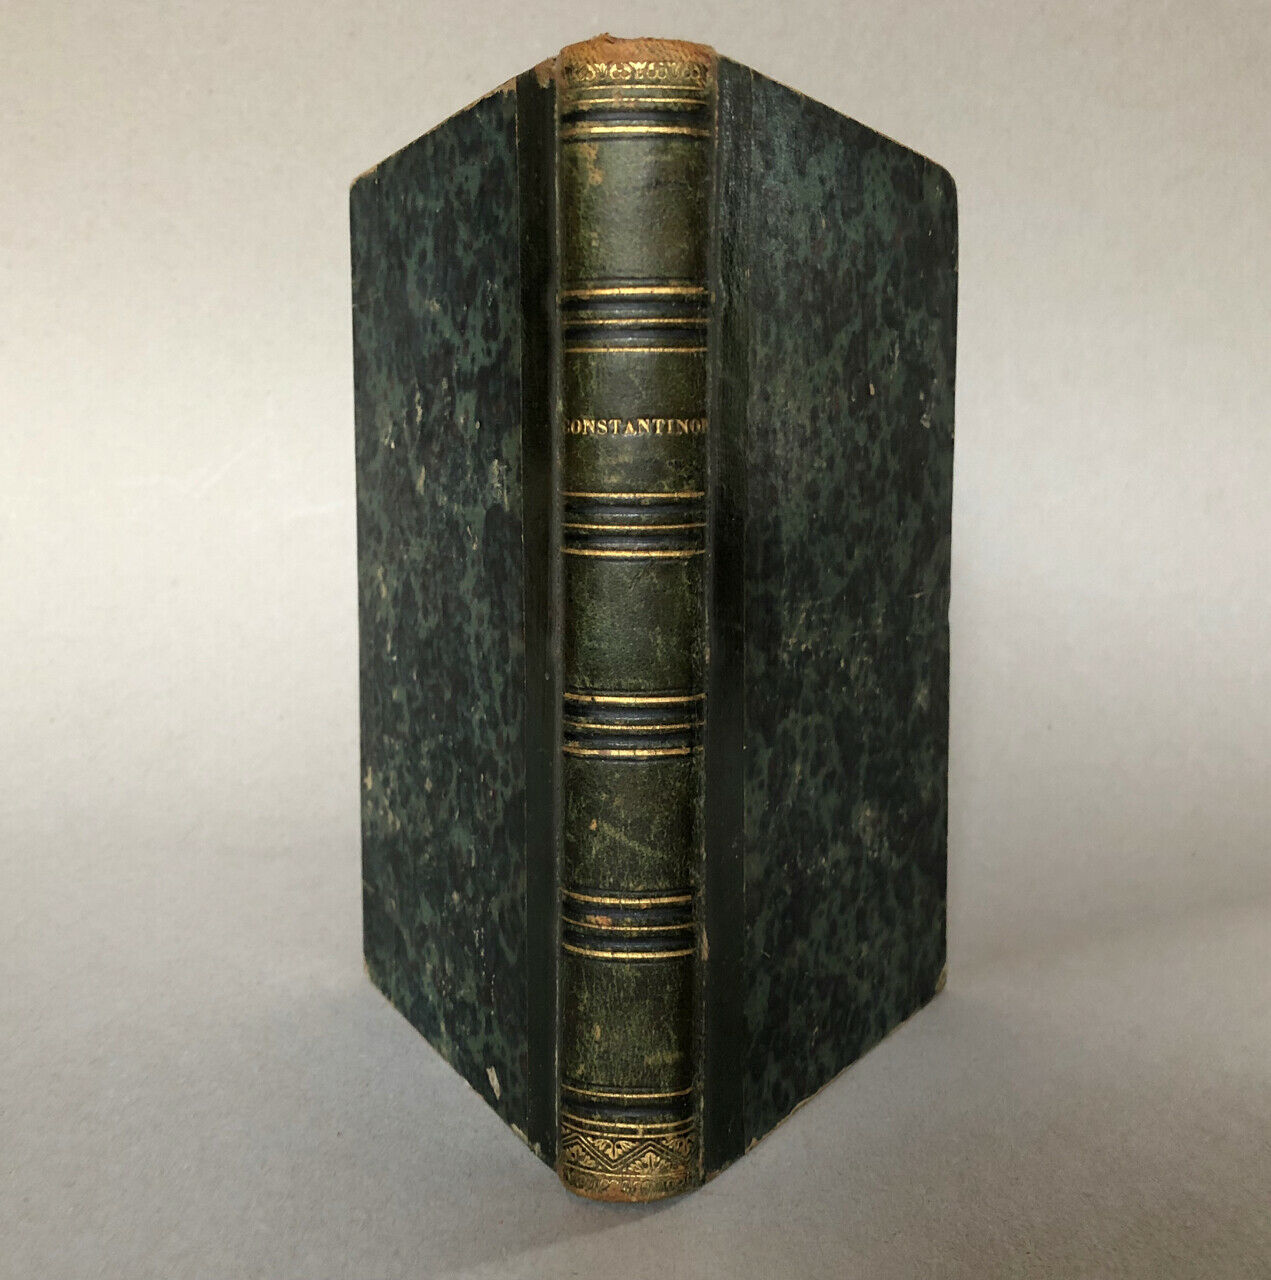 Théophile Gautier — Constantinople — original edition — Michel Lévy — 1853.